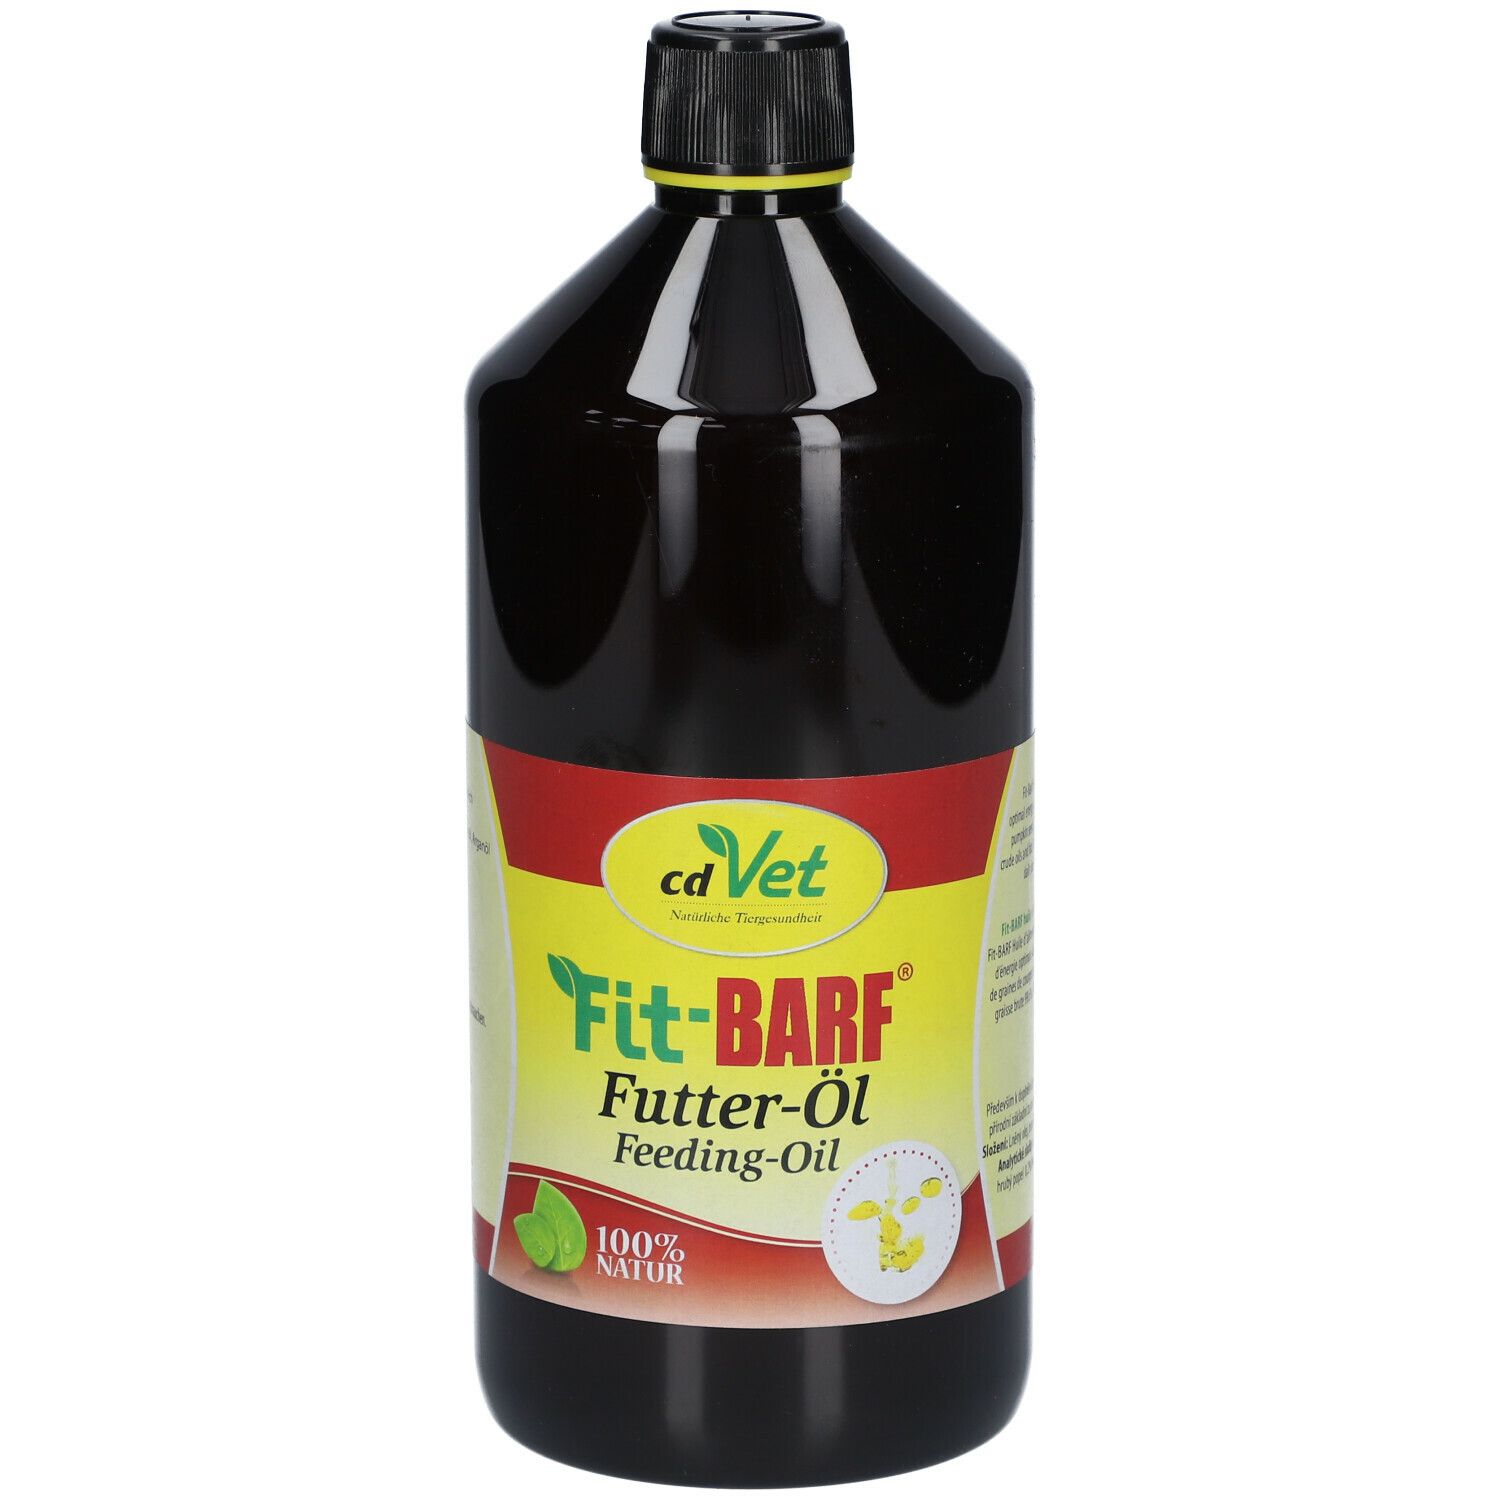 cdVet Fit-Barf® Futter-Öl